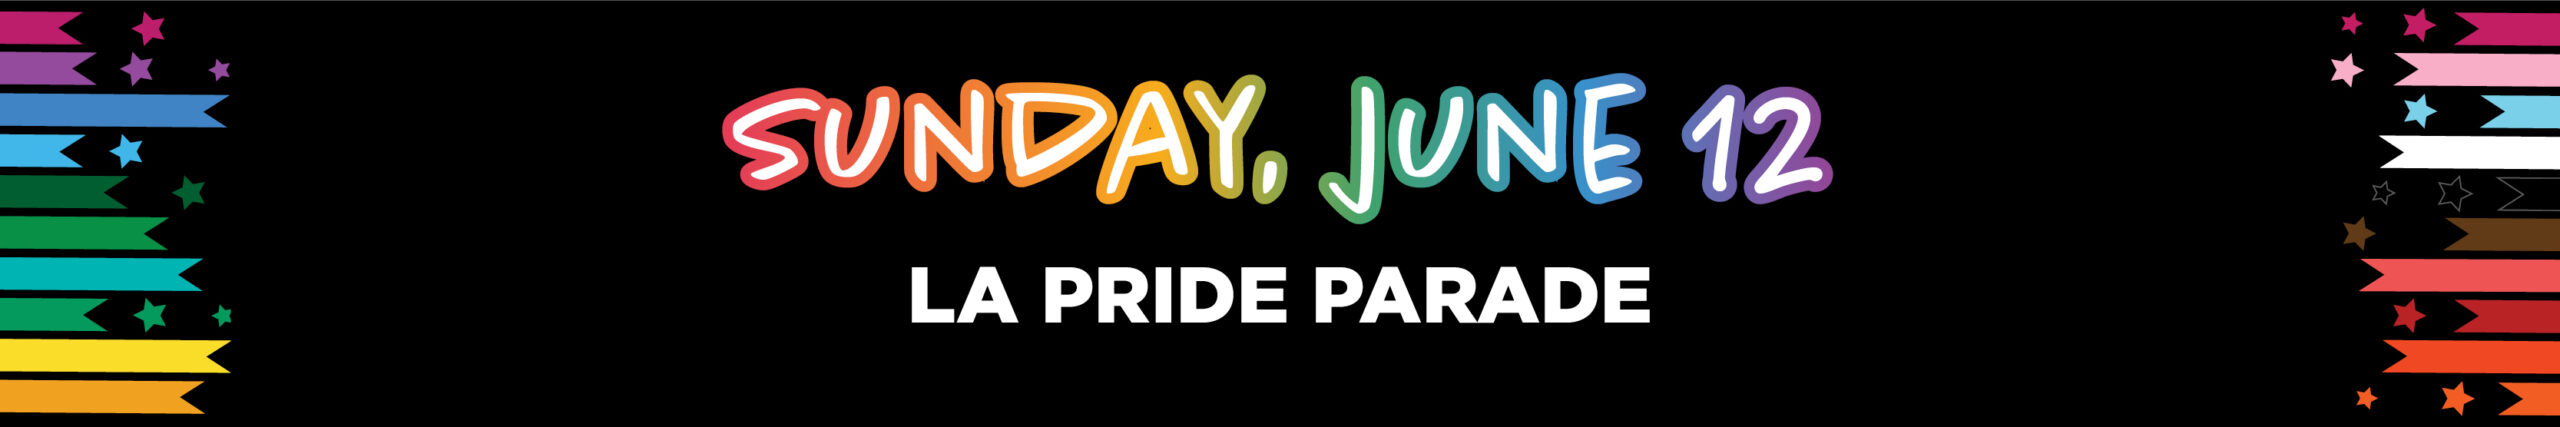 Sunday, June 12 LA PRIDE Parade